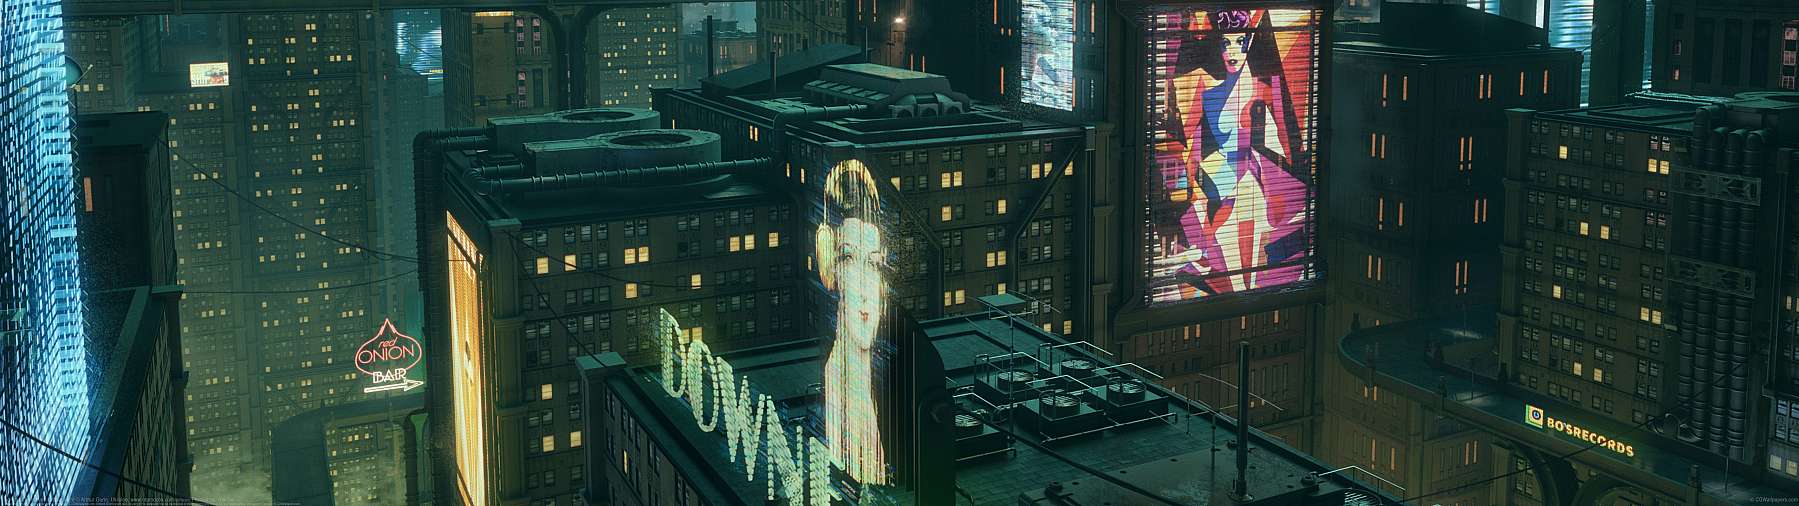 Artificial Detective - City at night ultralarge fond d'cran